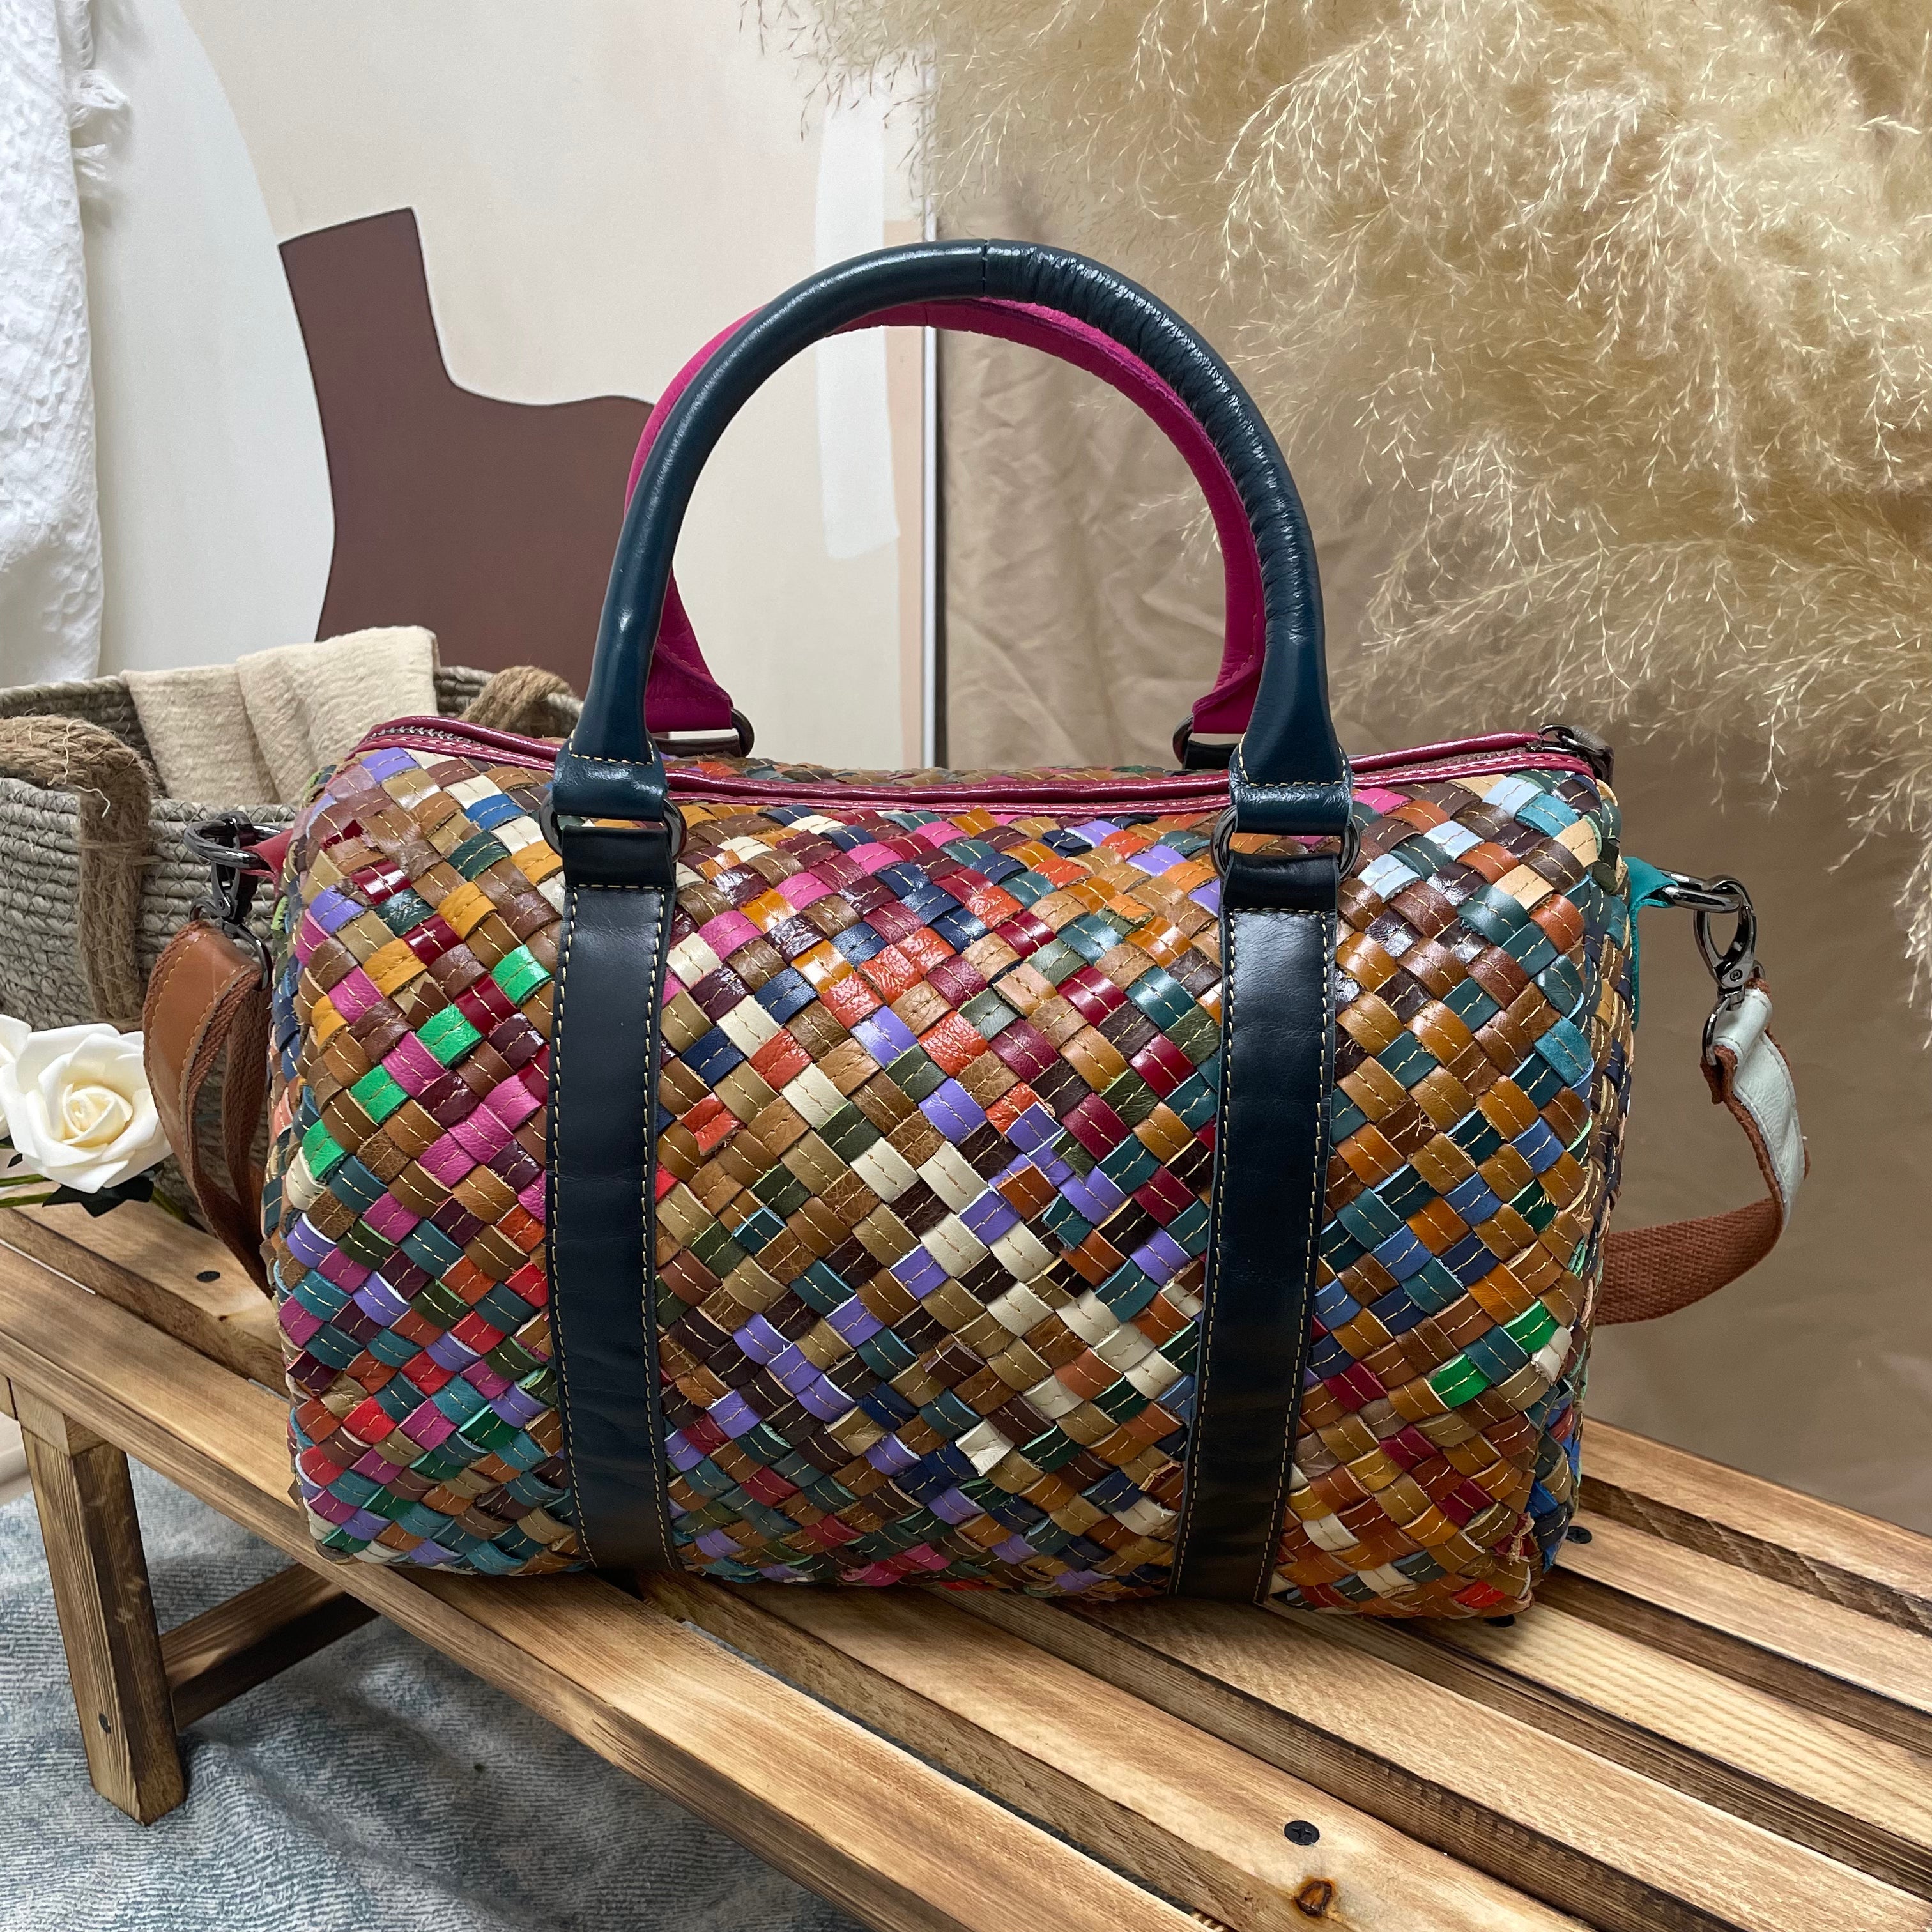 New fashion star style colorful genuine leather splicing woven casual contrasting handbag crossbody box-shaped sheepskin women's bag